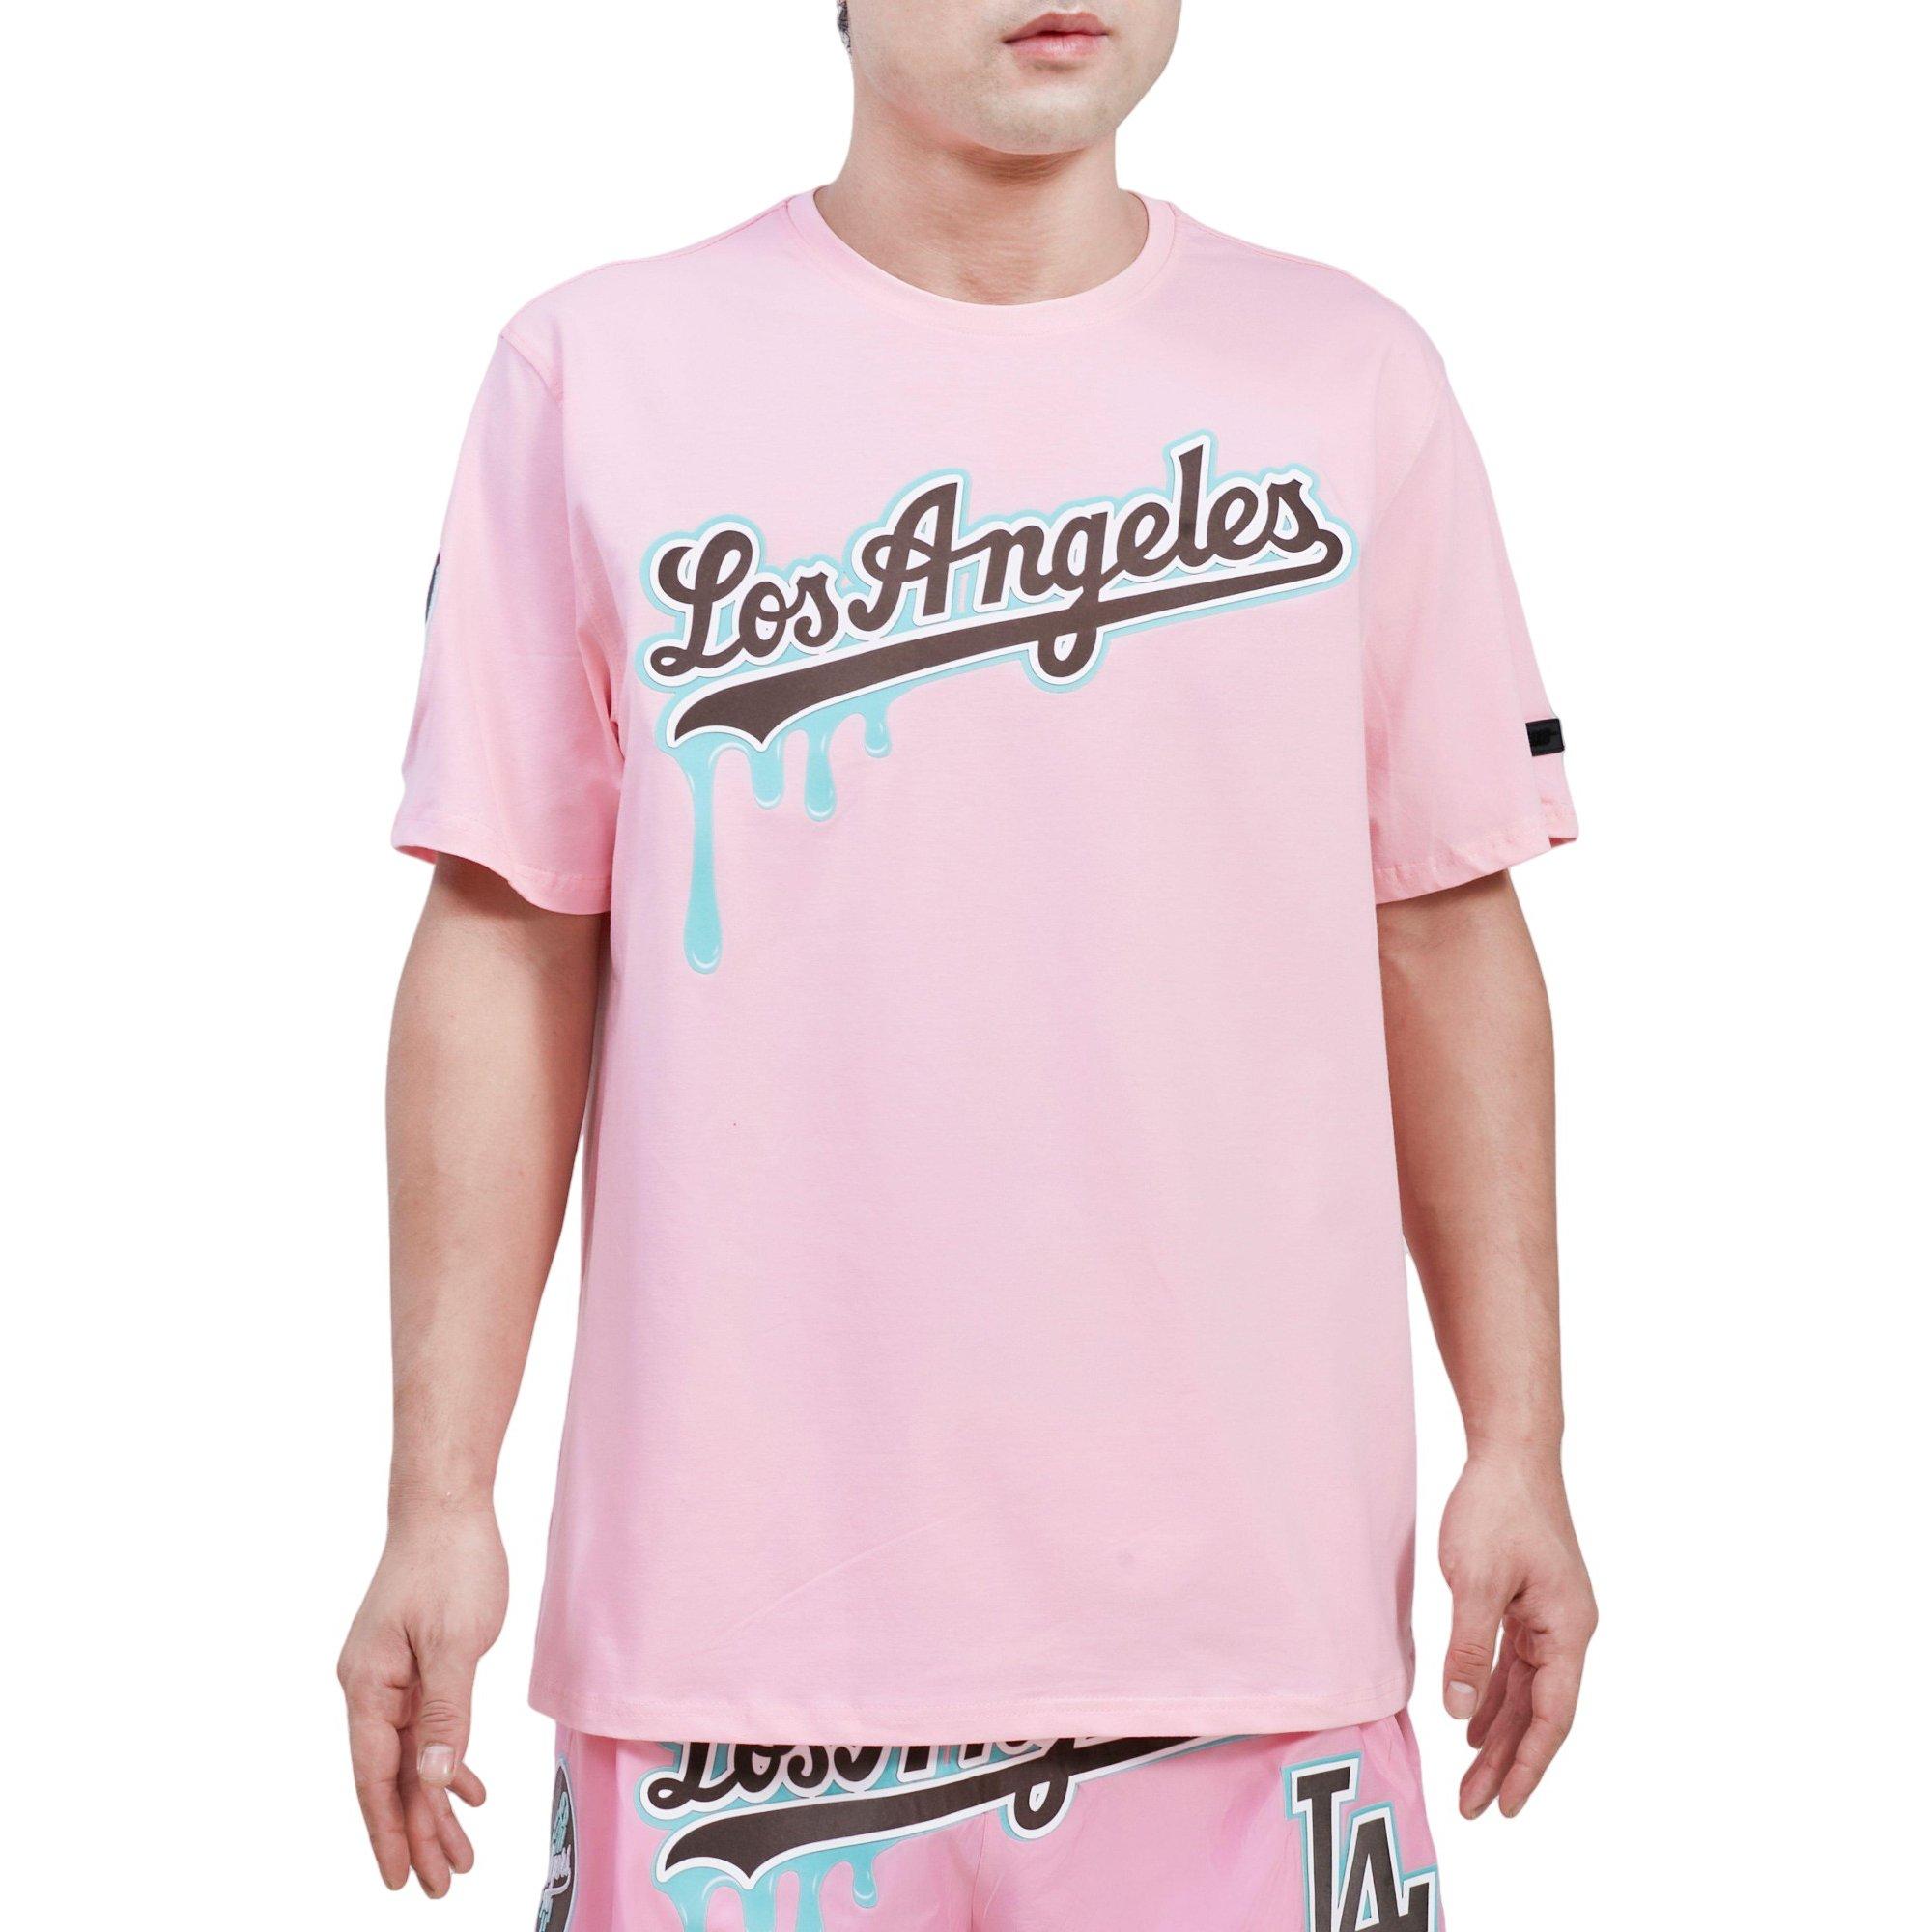 Men's Pro Standard Black Los Angeles Dodgers Team Logo T-Shirt Size: Small